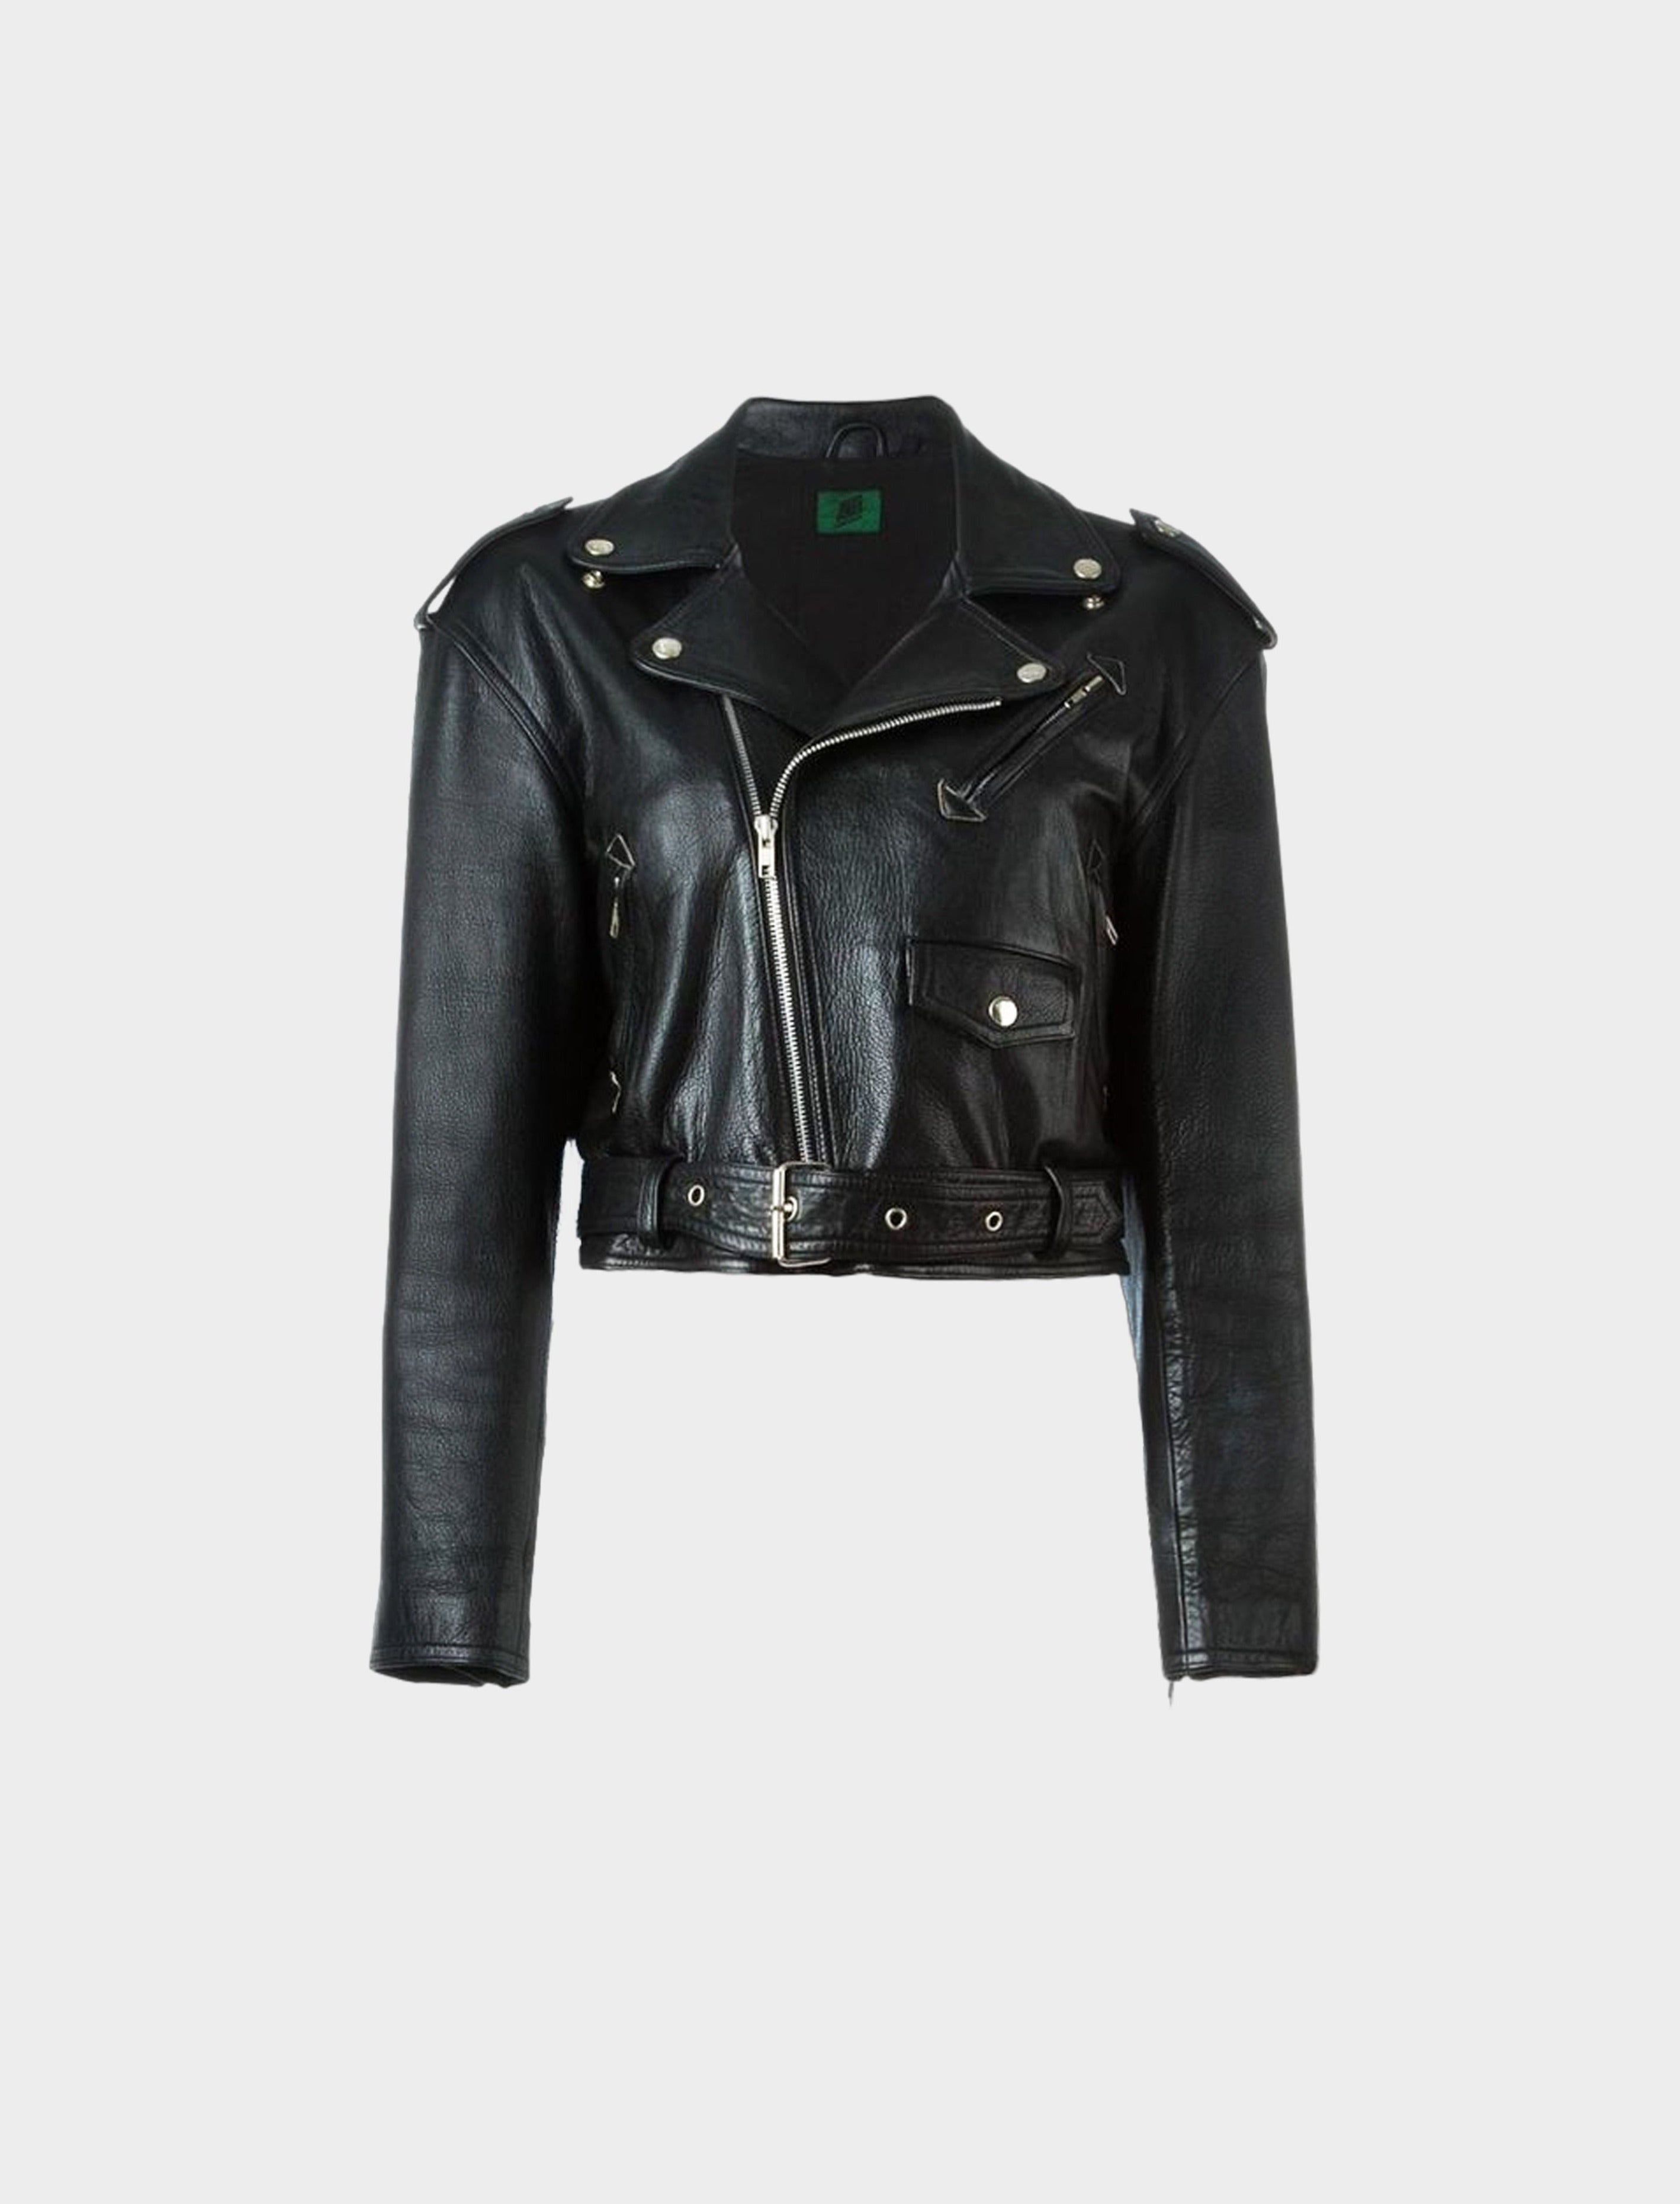 Jean Paul Gaultier 2000s Black Leather Perfecto Cropped Biker ...